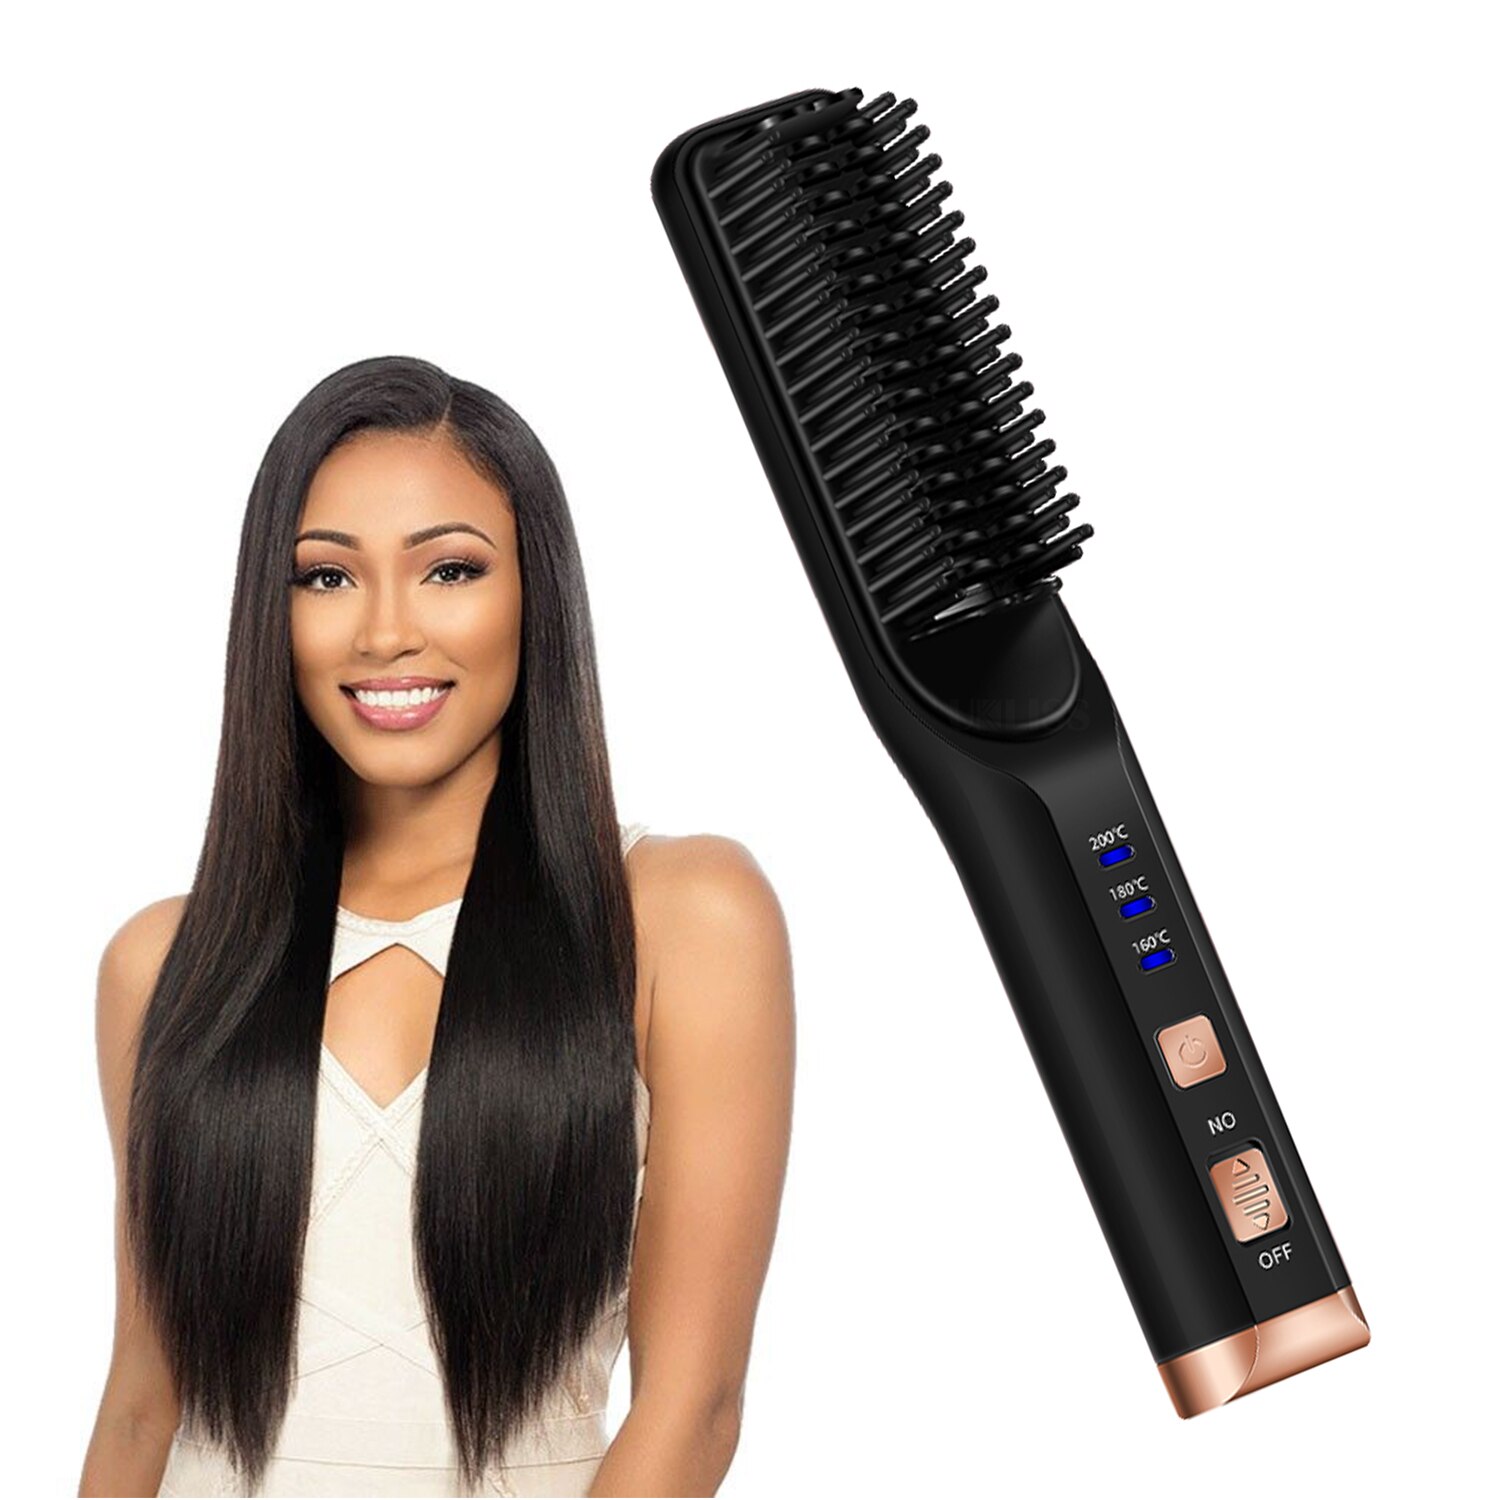 Newly Wireless Hair Straightener Brush Styler Mutilfunction Eletric Hair Straightener Comb Protable USB Rechargeable Flat Iron: Black